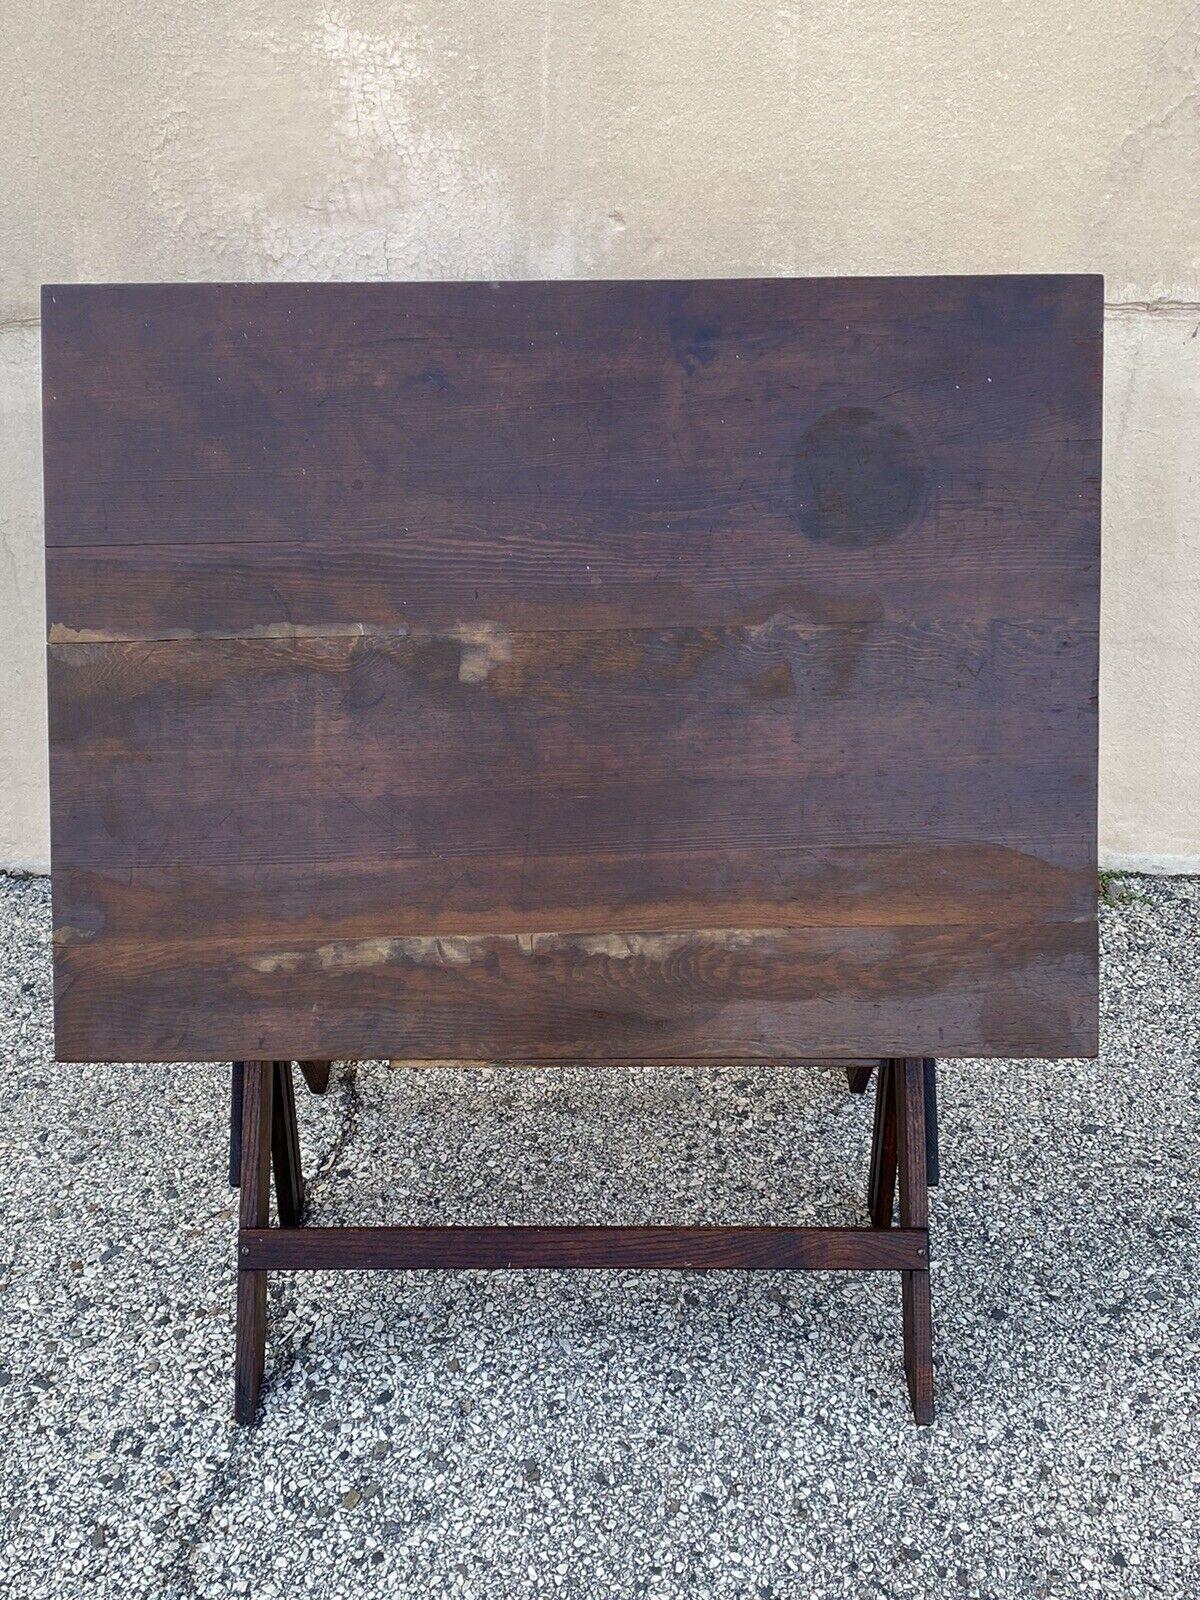 Vintage Anco Bilt Oak Wood Adjustable Drafting Table Desk Industrial Work Stand 5